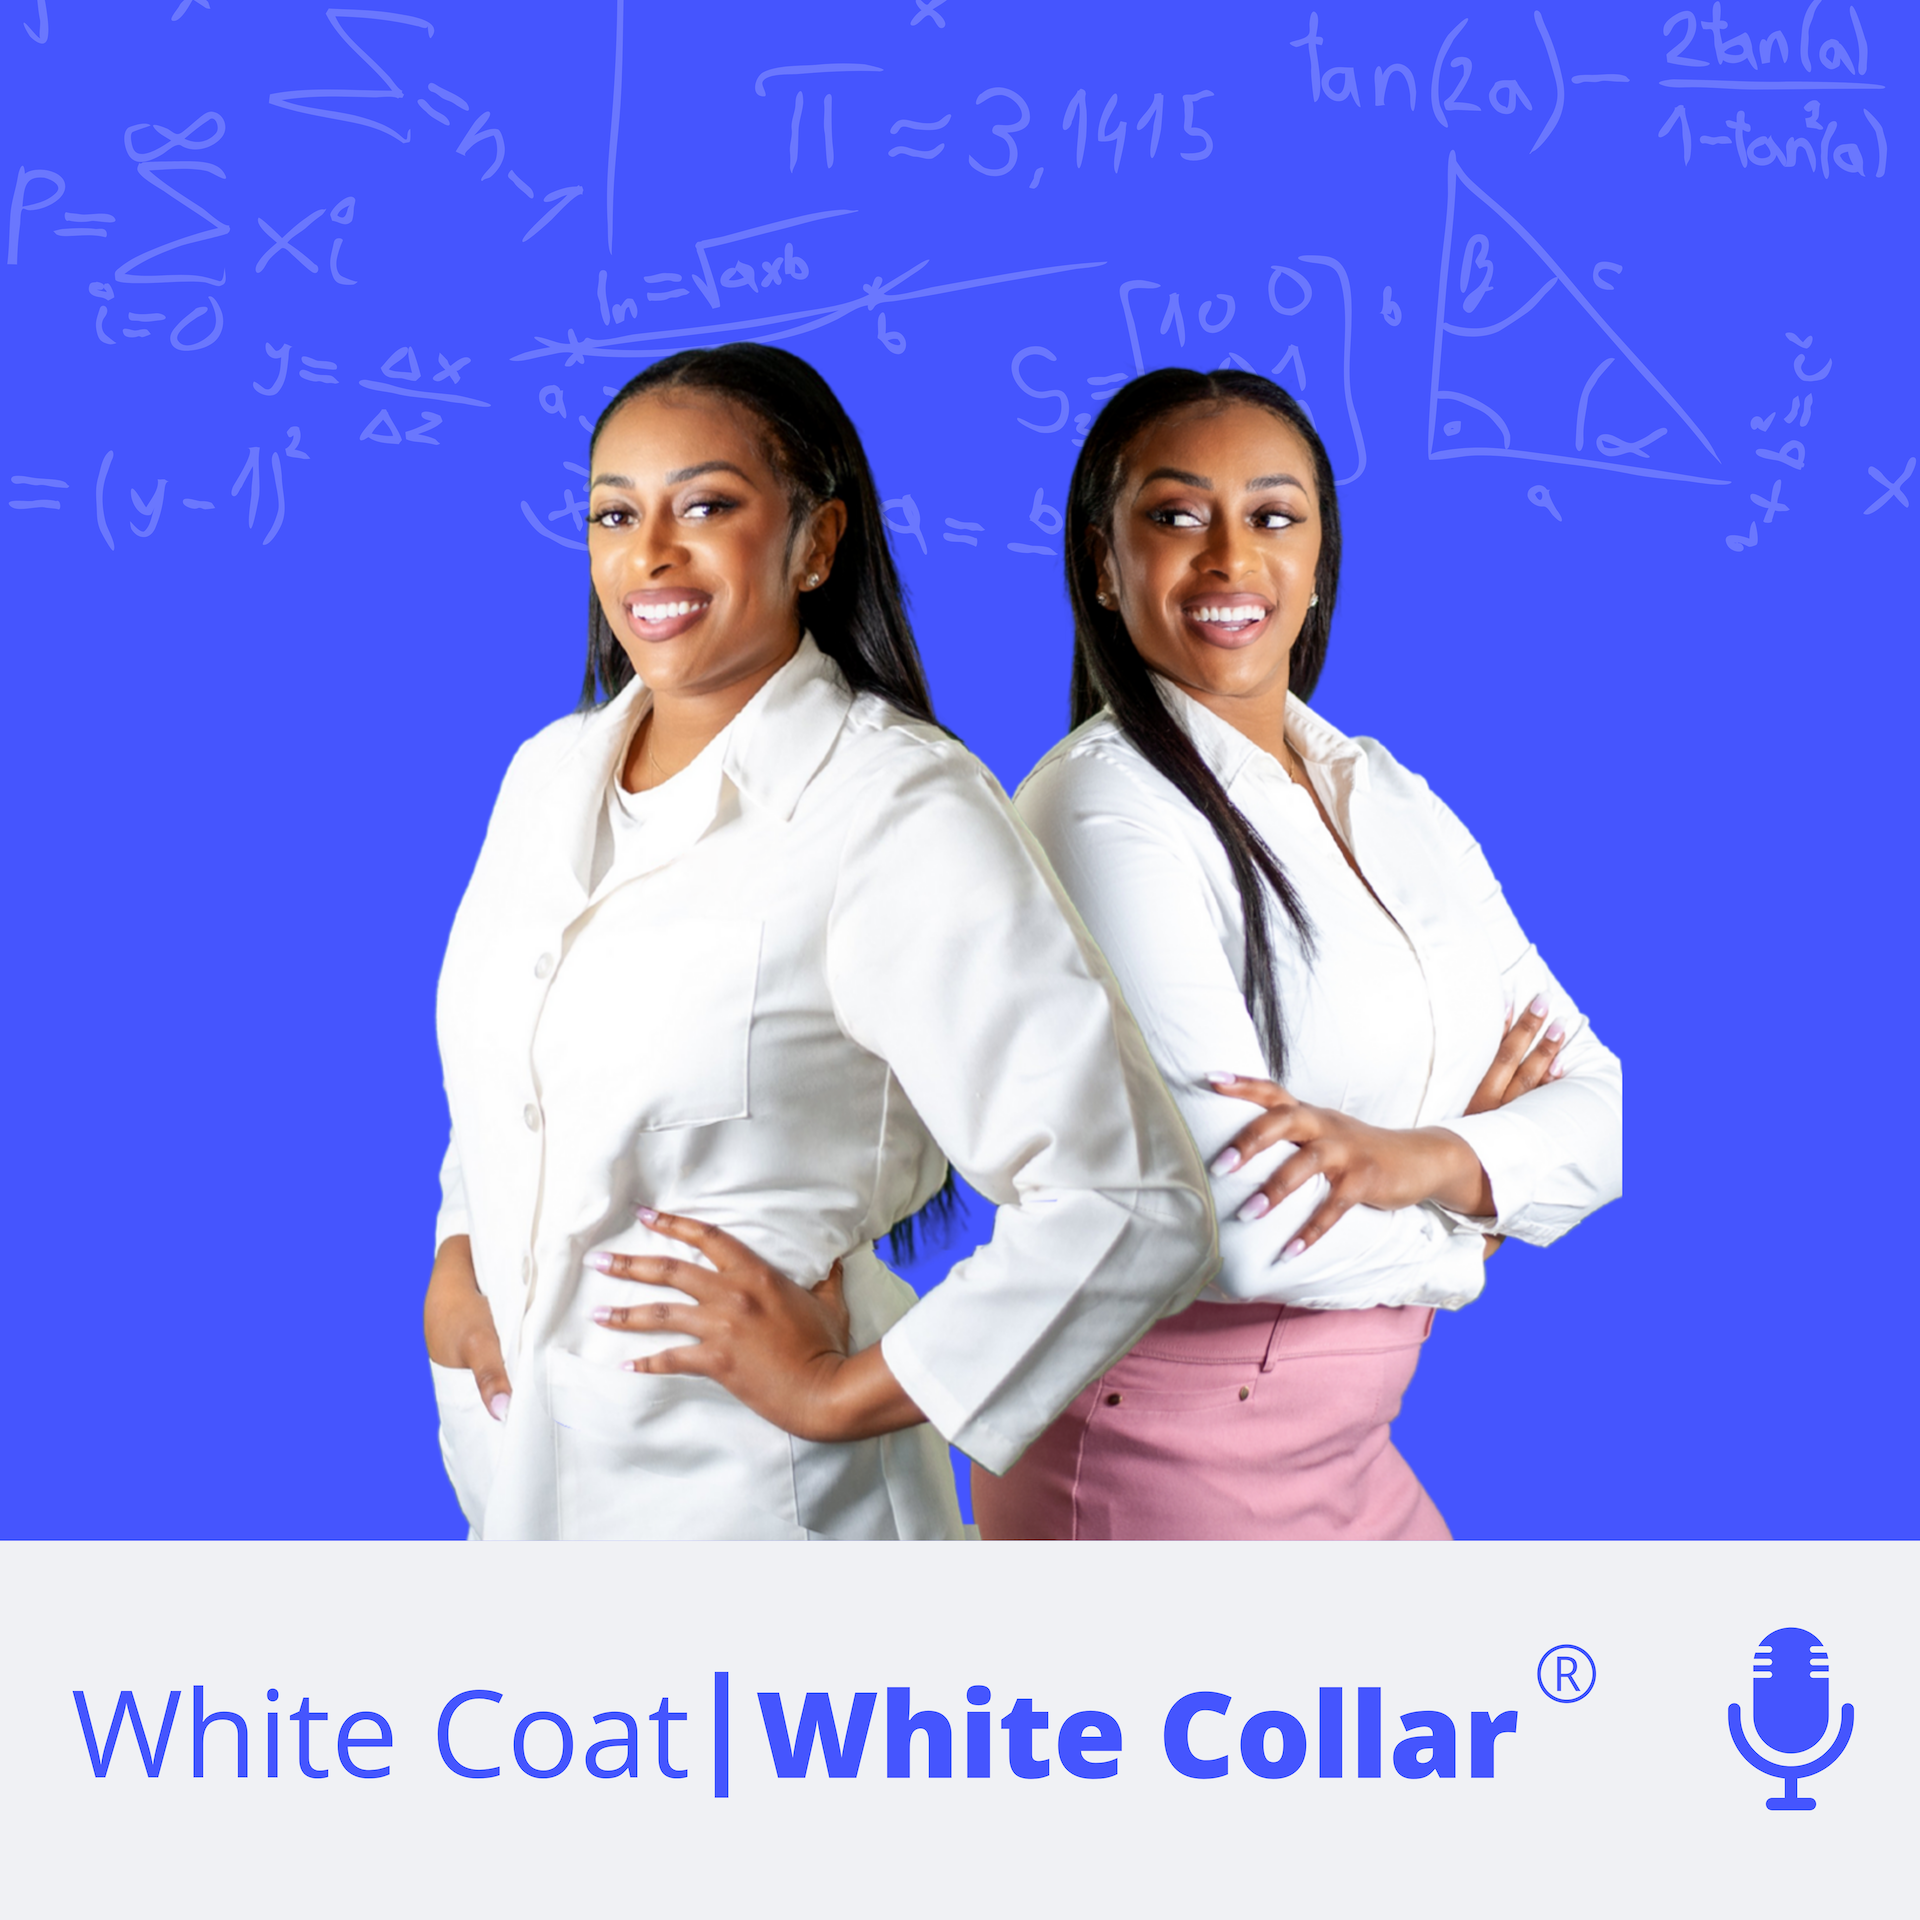 White Coat White Collar ®